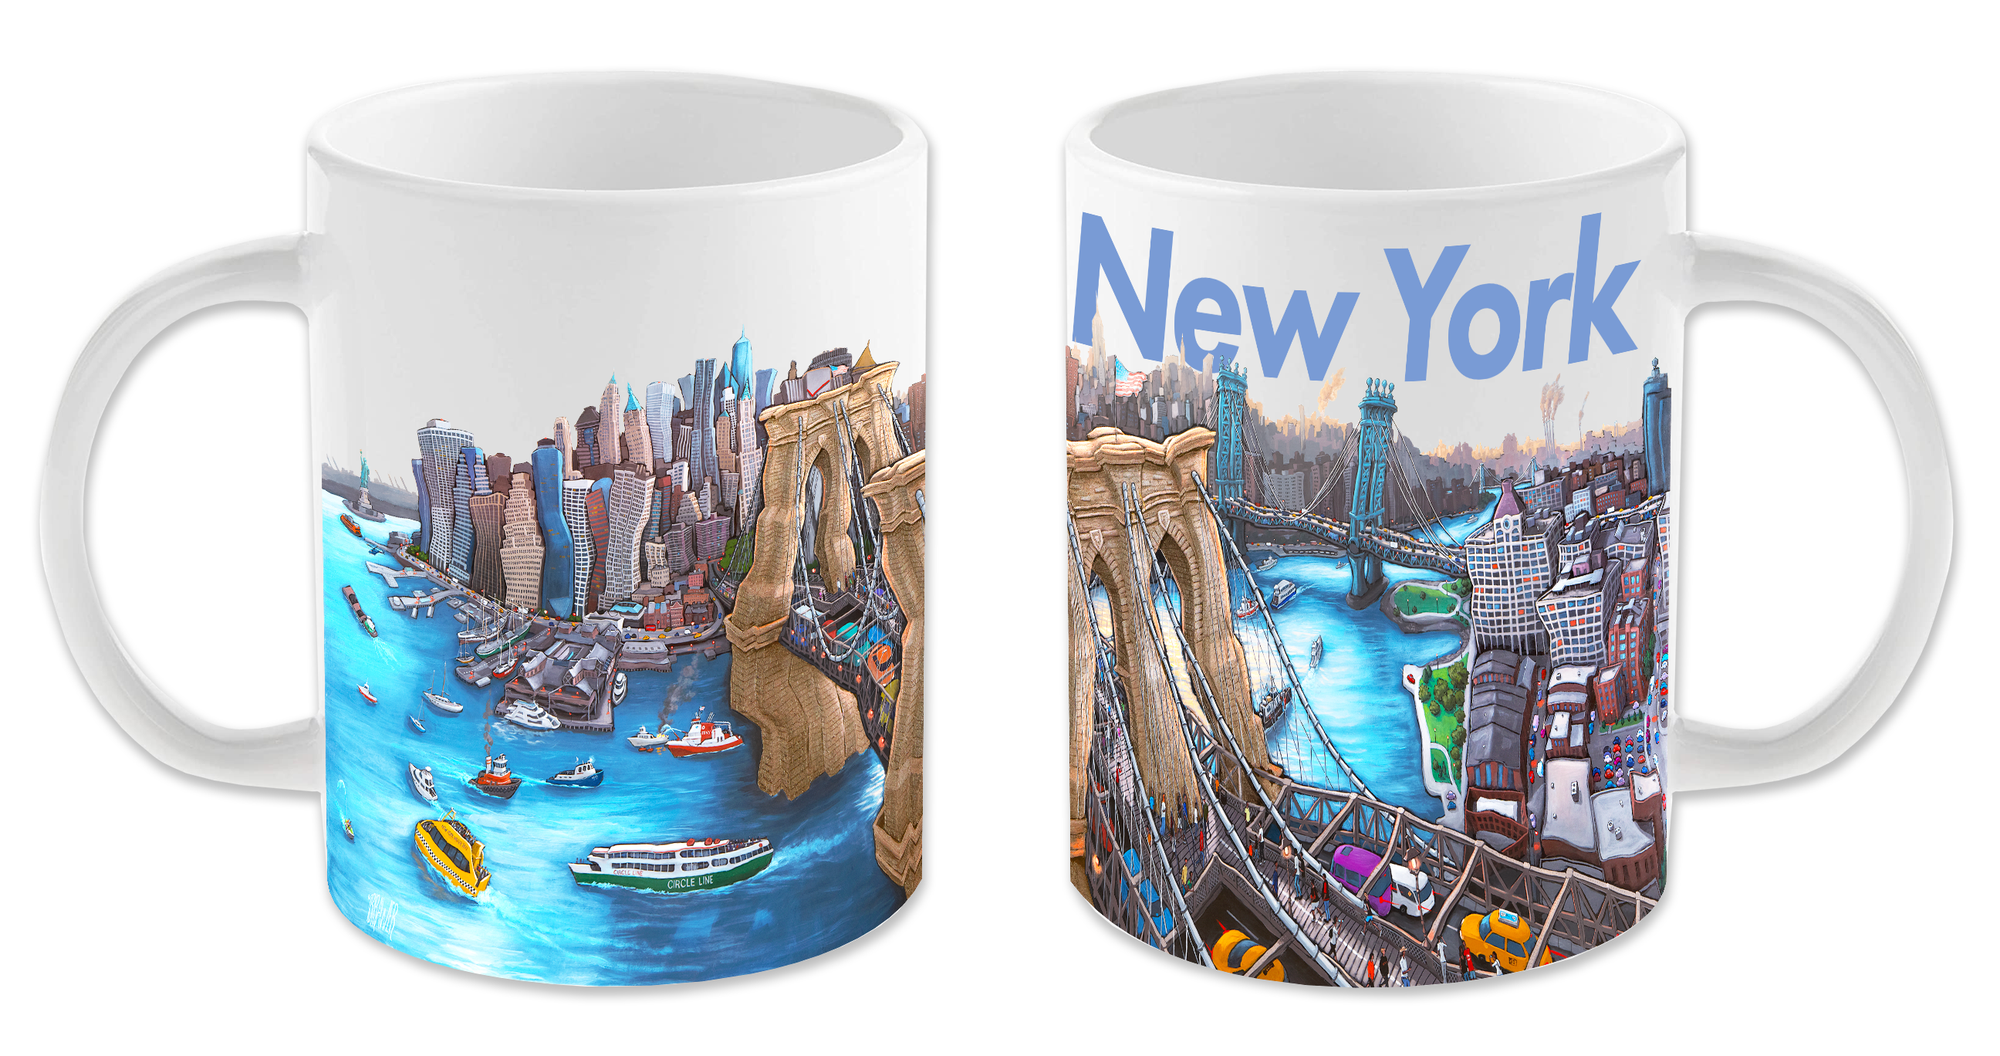 "Brooklyn Bridge - New York" Mug